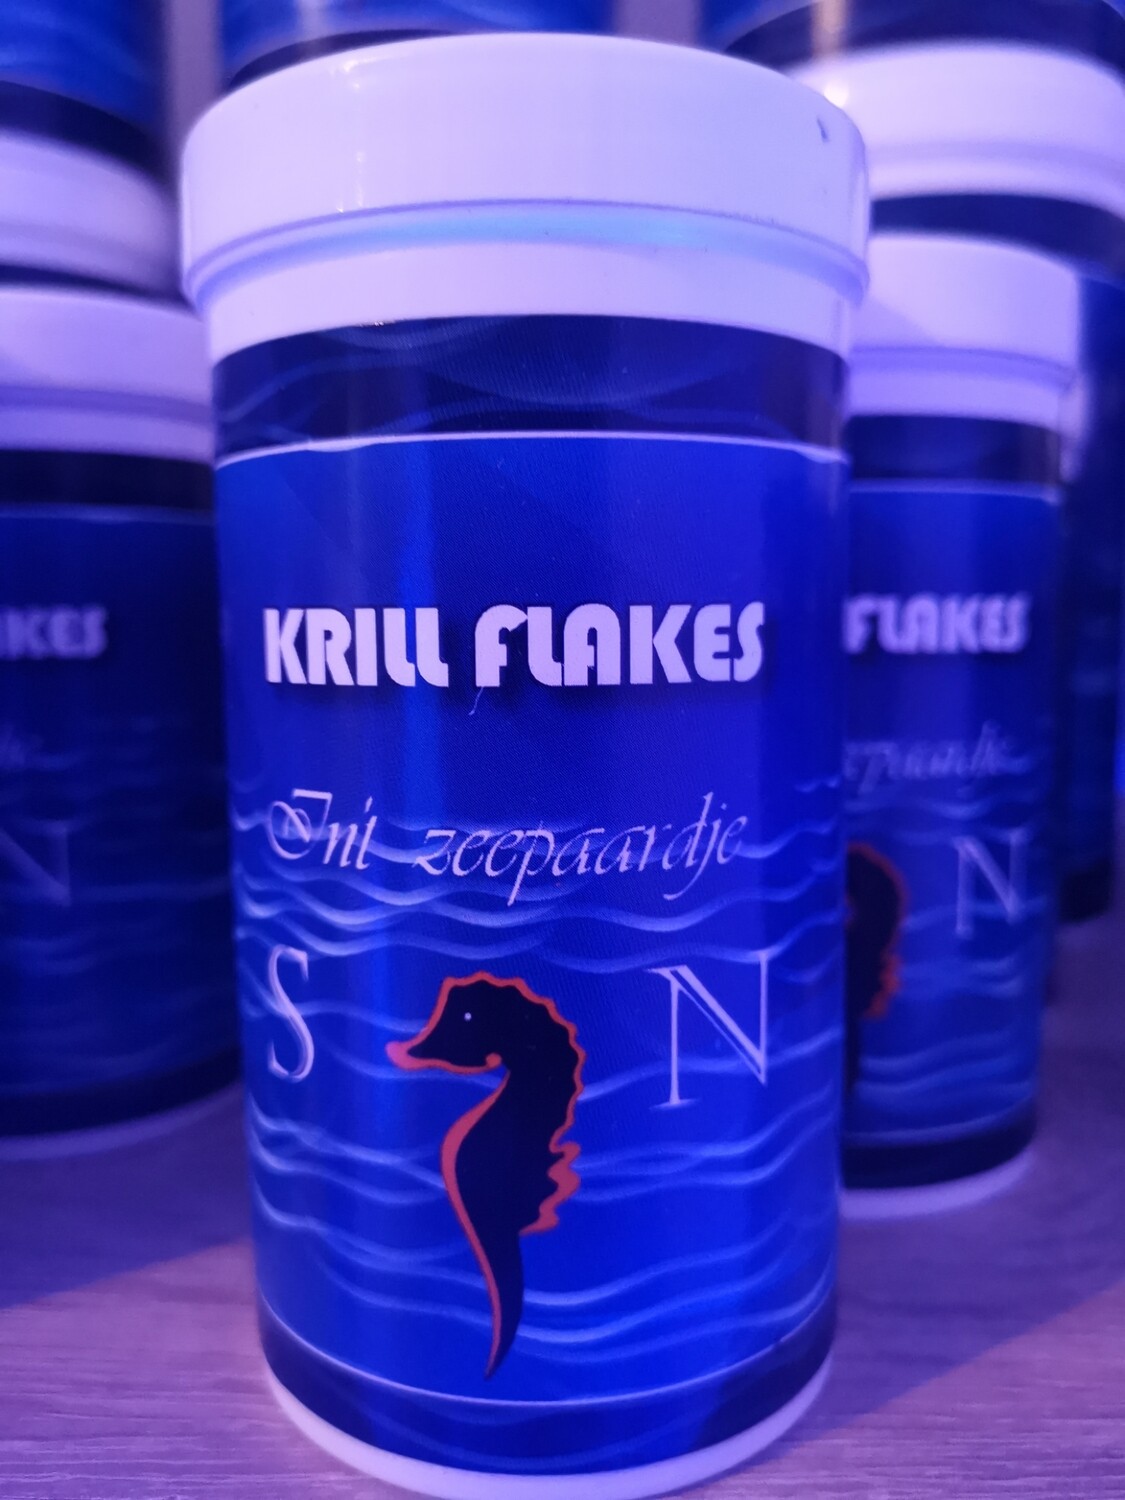 Krill flakes